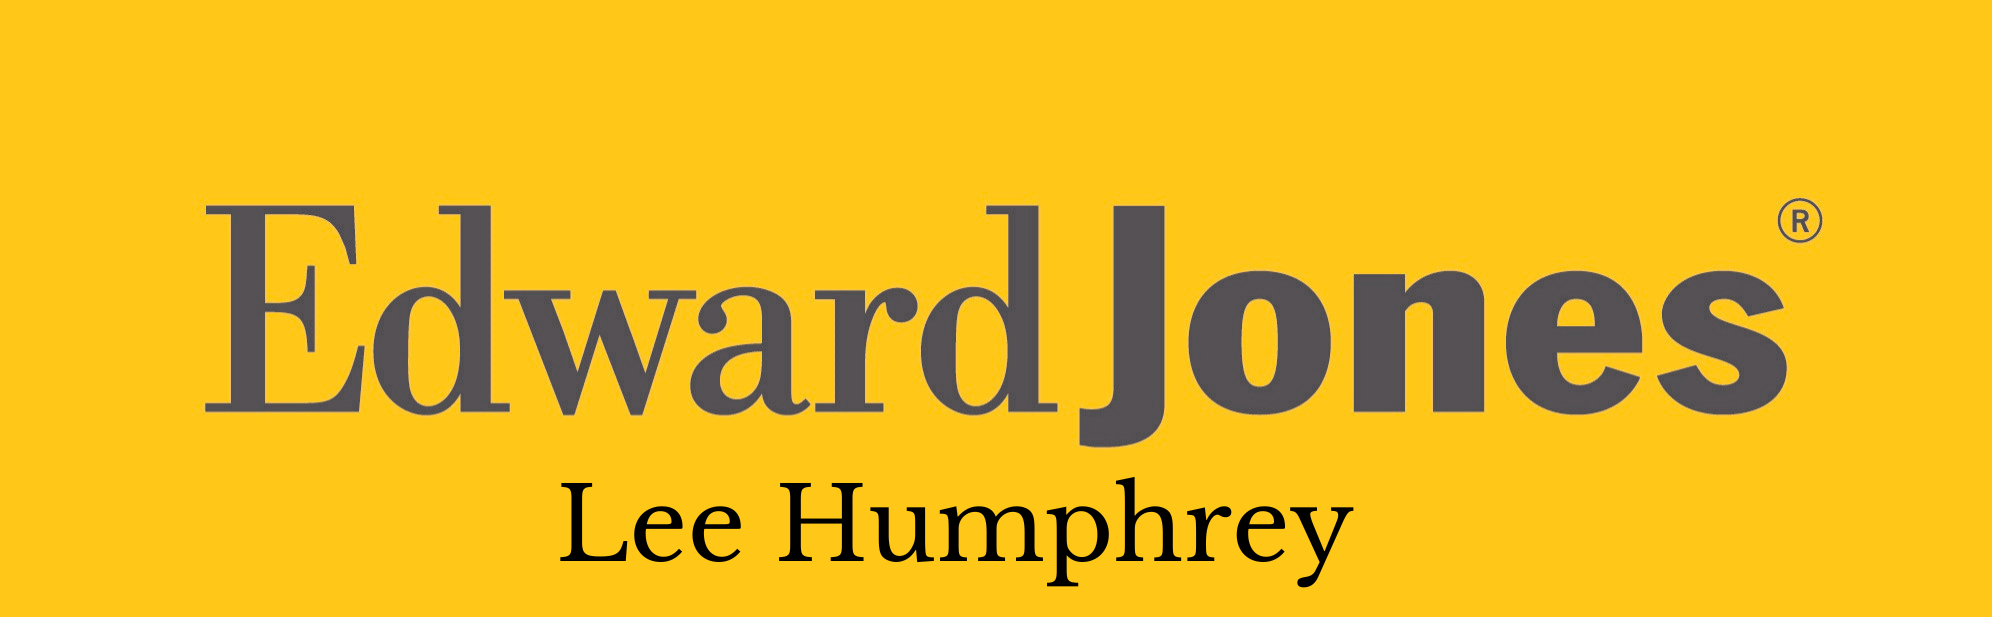 J. Edward Jones Lee Humphrey (Presentación)